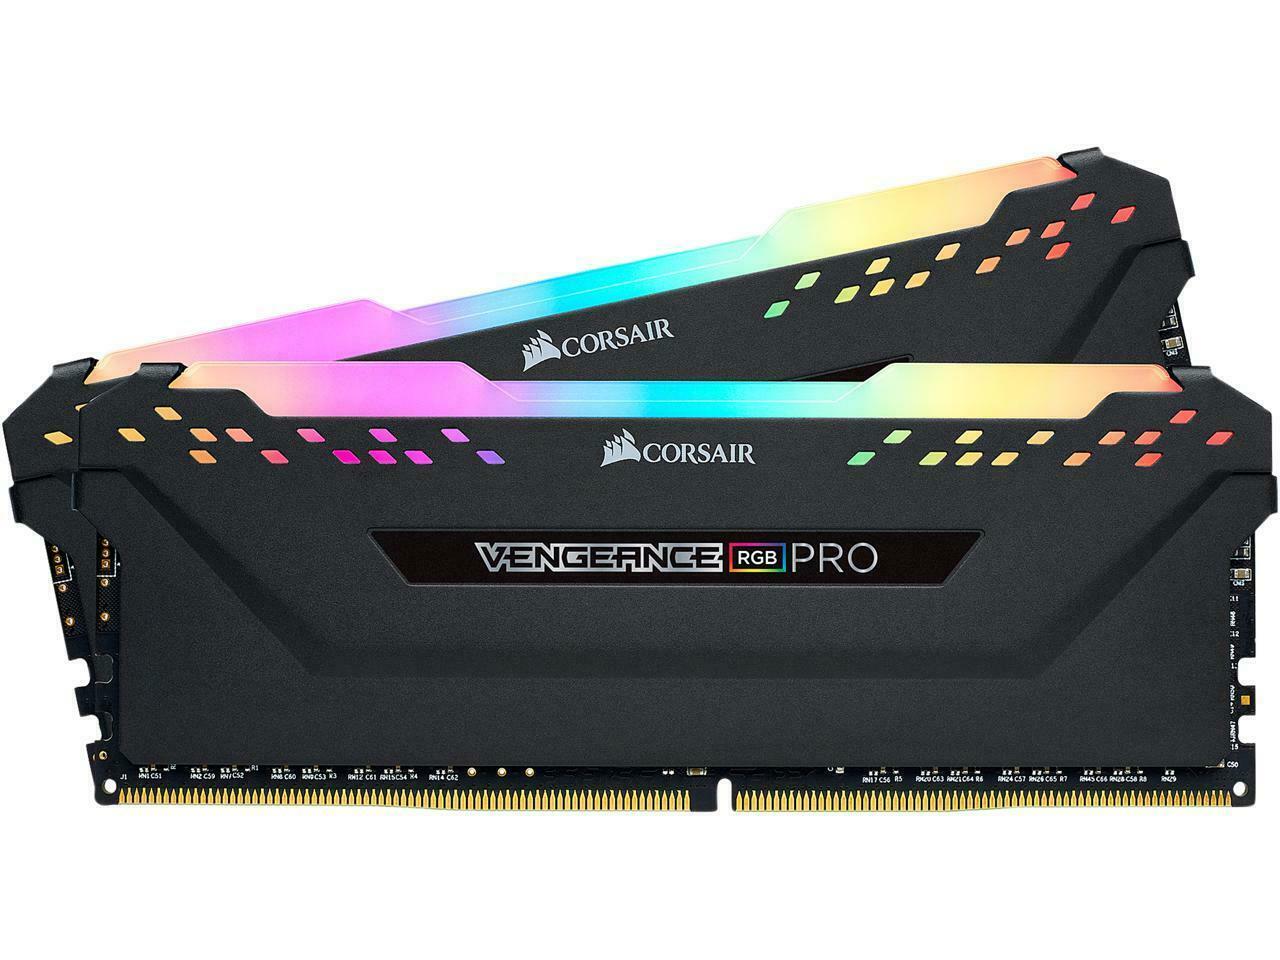 64GB (2x32GB) Corsair Vengeance RGB PRO DDR4-3200 RAM CL16 (16-20-20-38) Kit